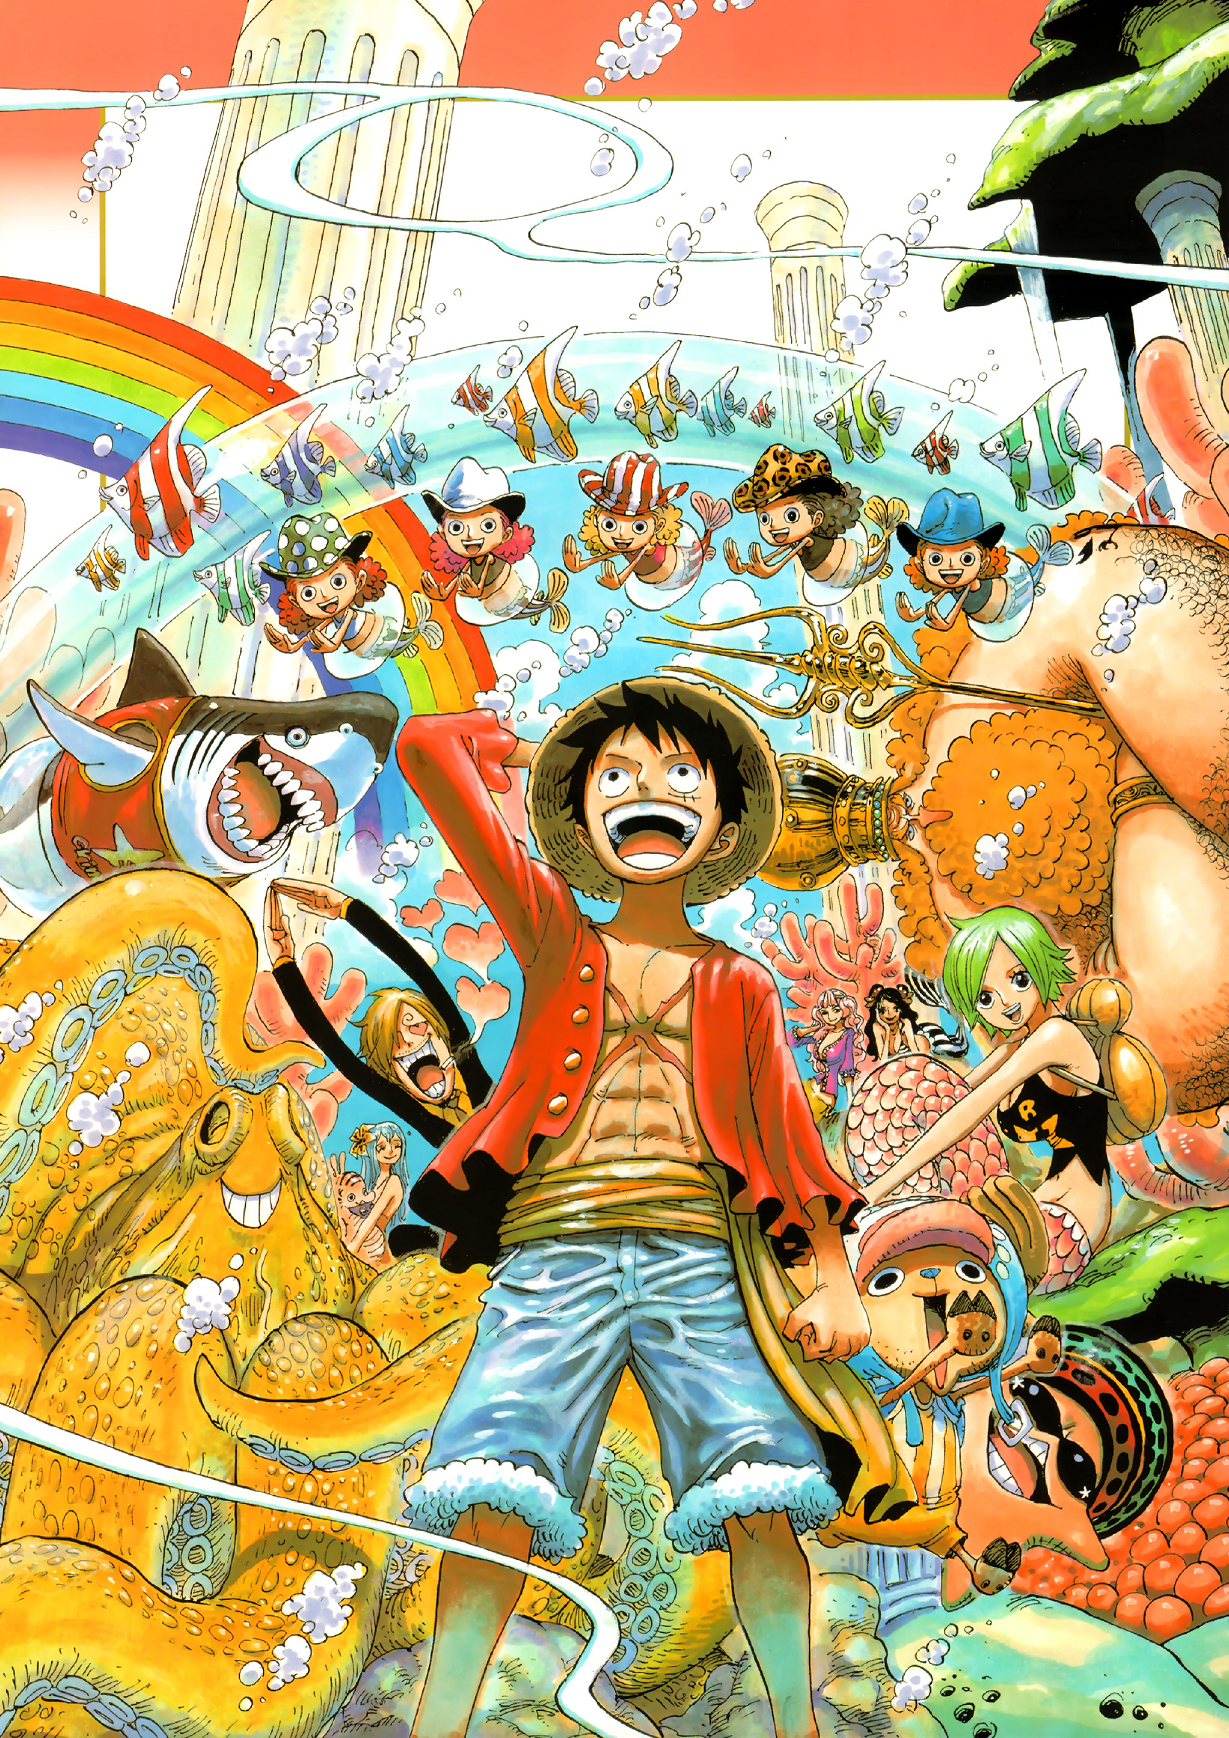 One Piece: Episode of Luffy: Adventure on Hand Island (2012 TV